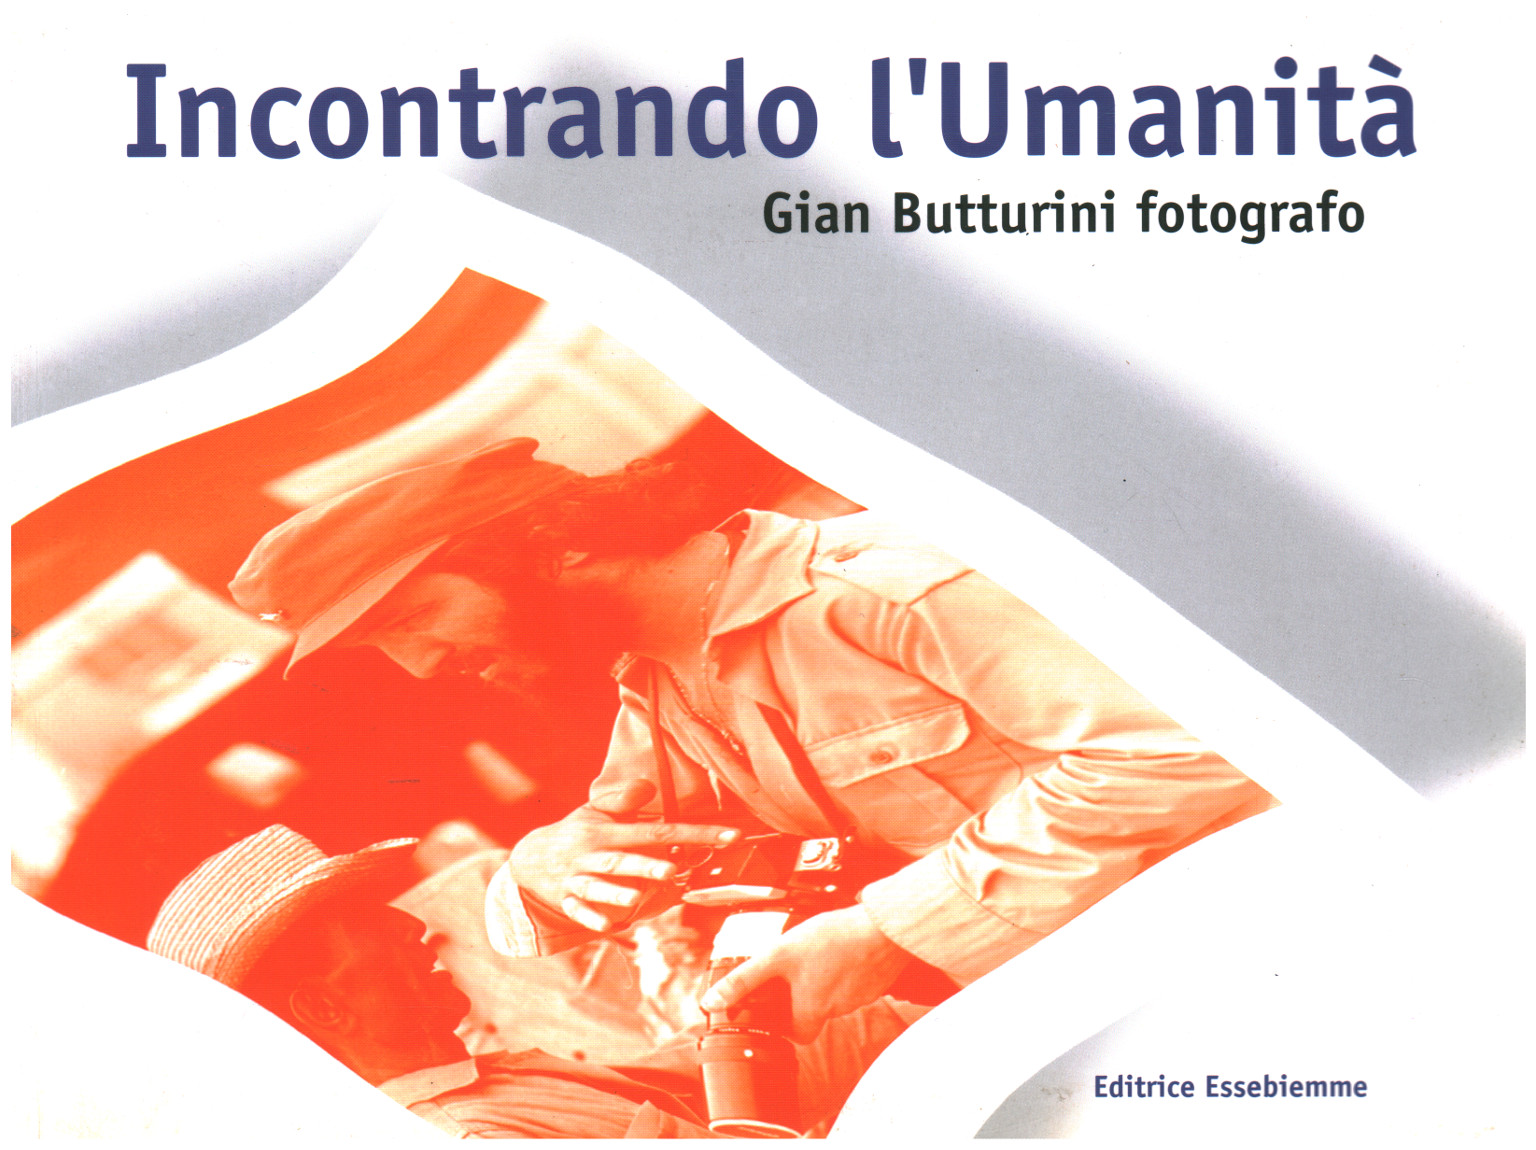 Incontrando l umanità, Gian Butturini